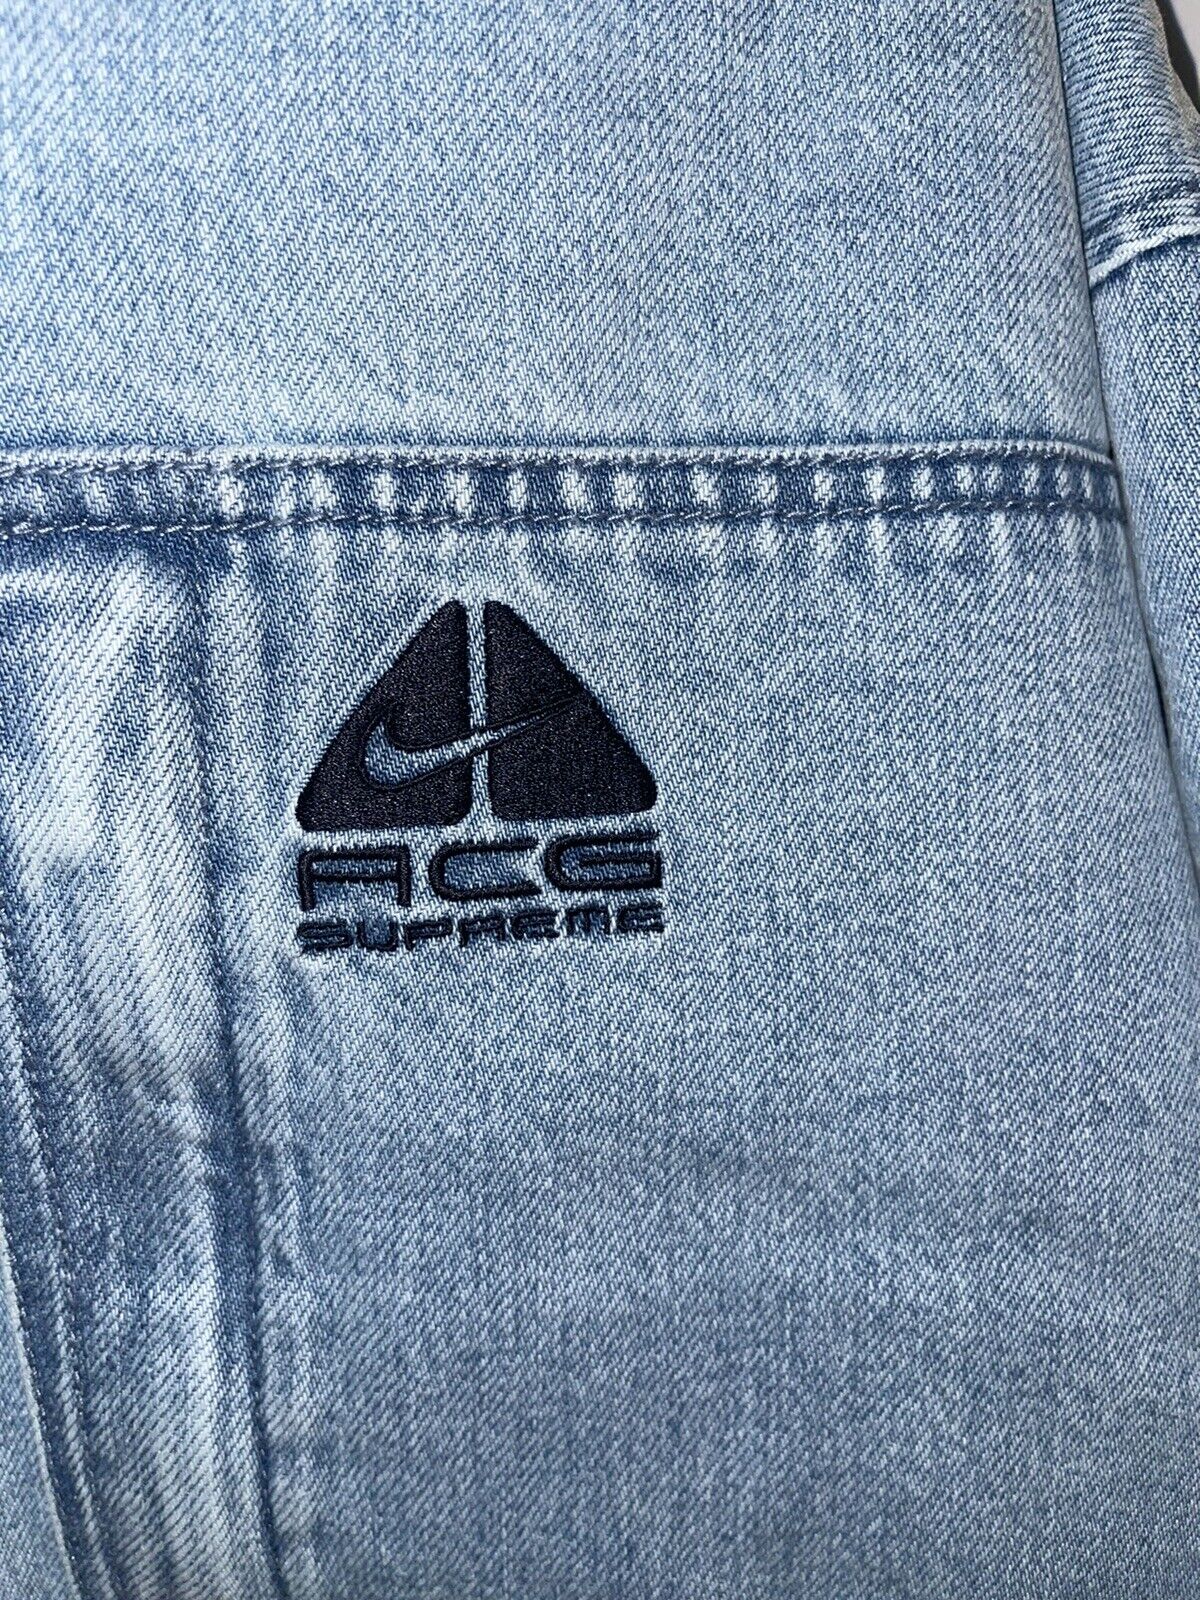 Supreme/Nike ACG Denim Pullover Washed Blue Size Medium | eBay